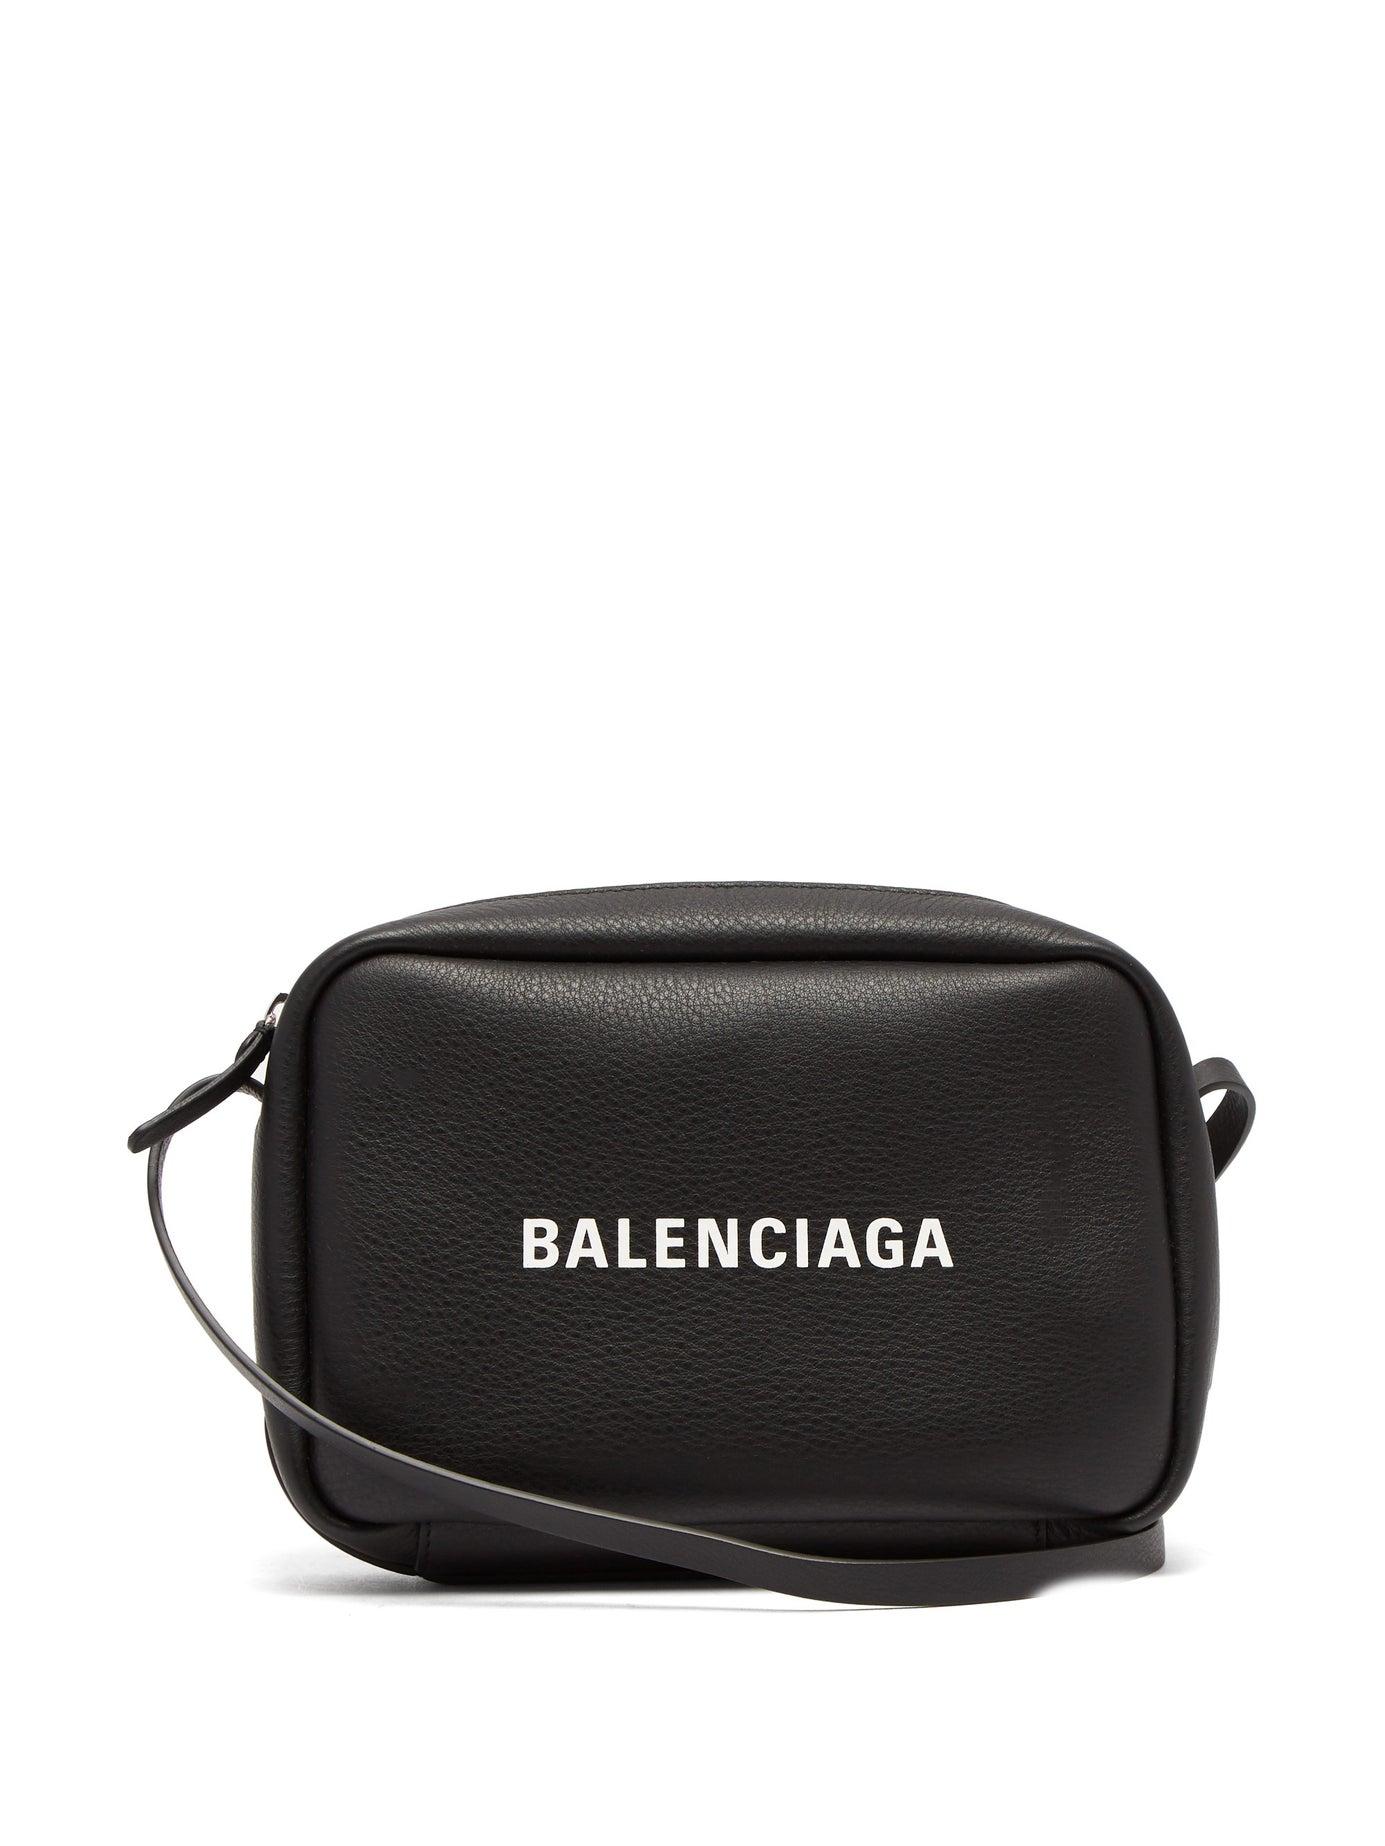 Balenciaga Leather Everyday Cross-body Bag in Black White (Black) - Lyst